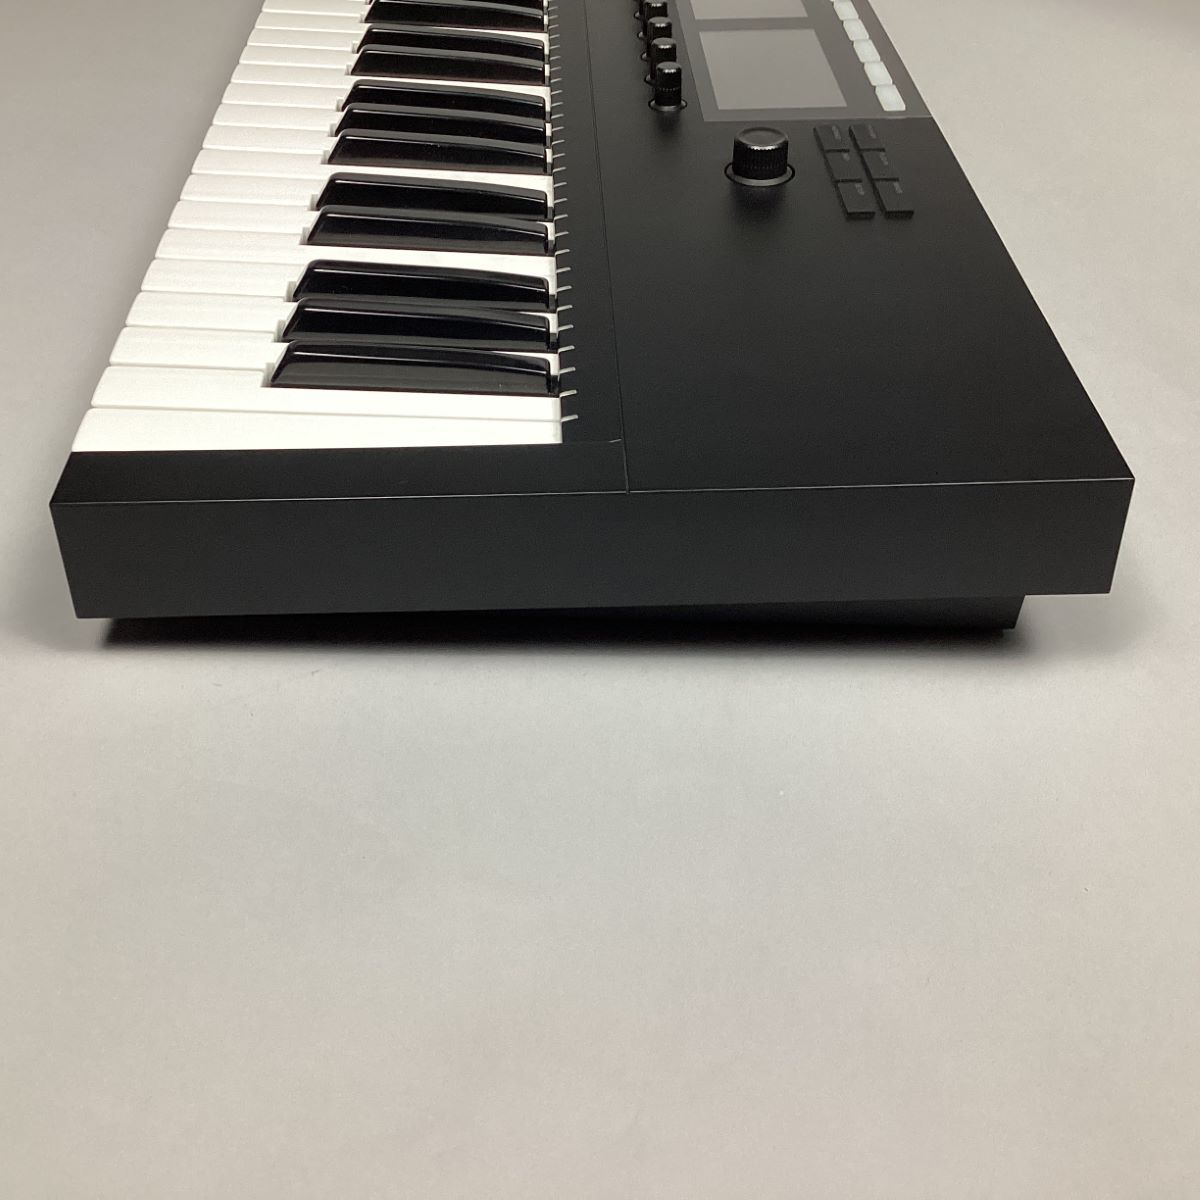 KOMPLETE KONTROL S49 MK2 MIDIキーボード-